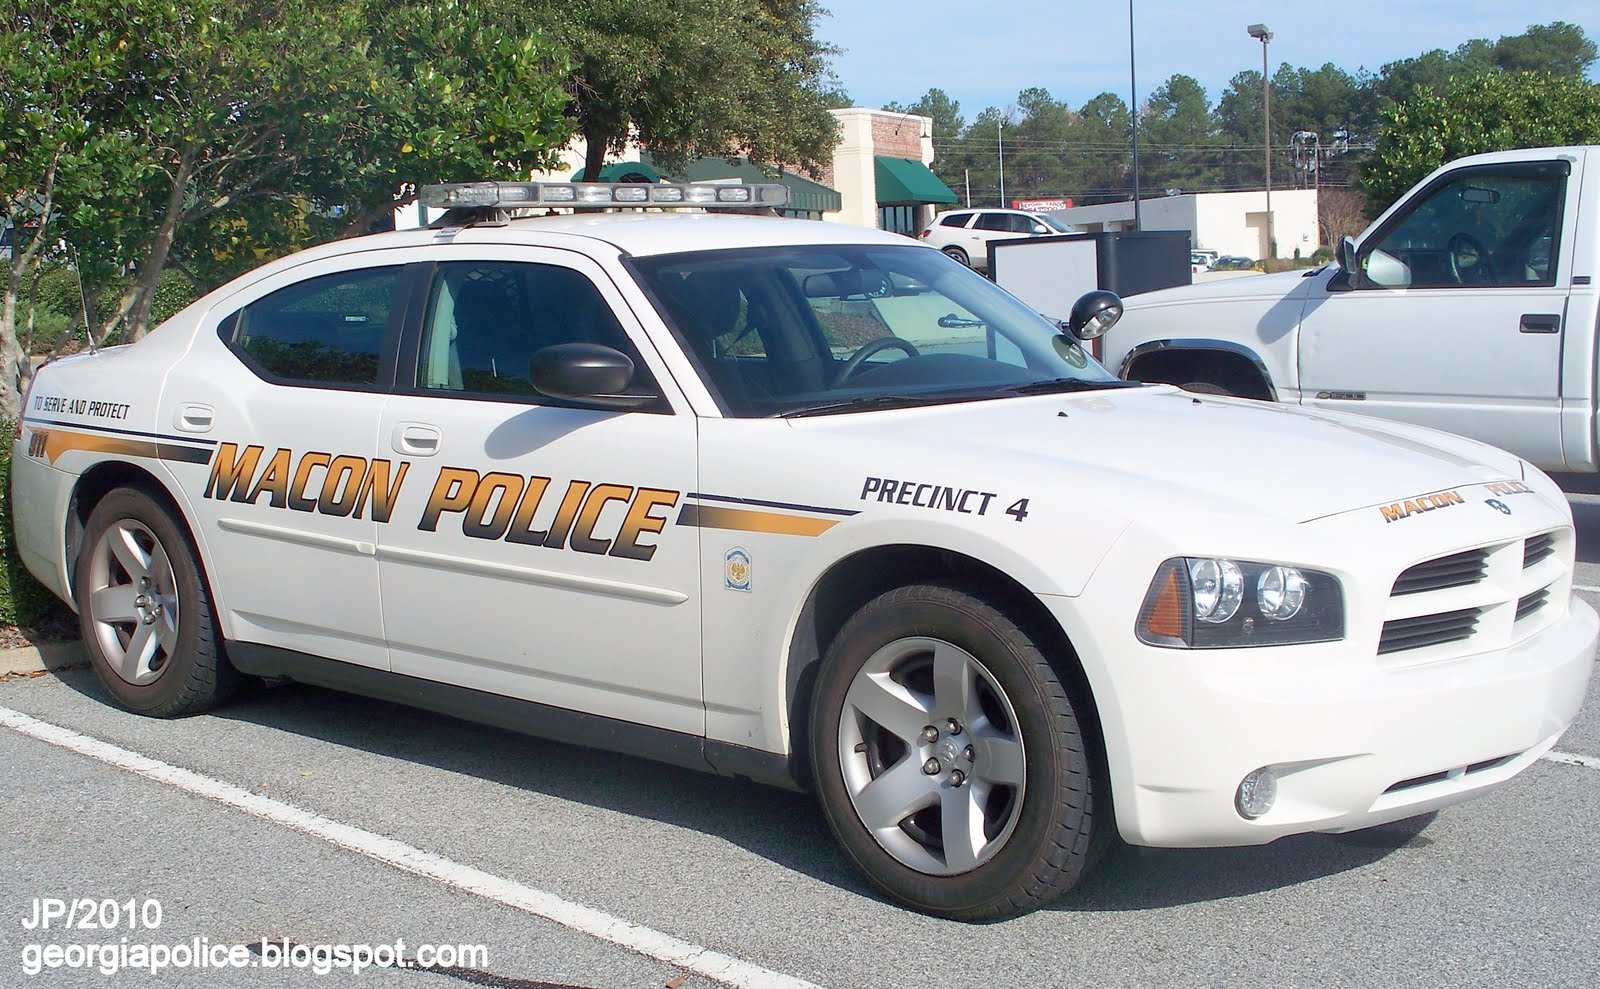  POLICE DEPARTMENT, Macon Police Patrol Car,Charger, Precinct 4, Bibb